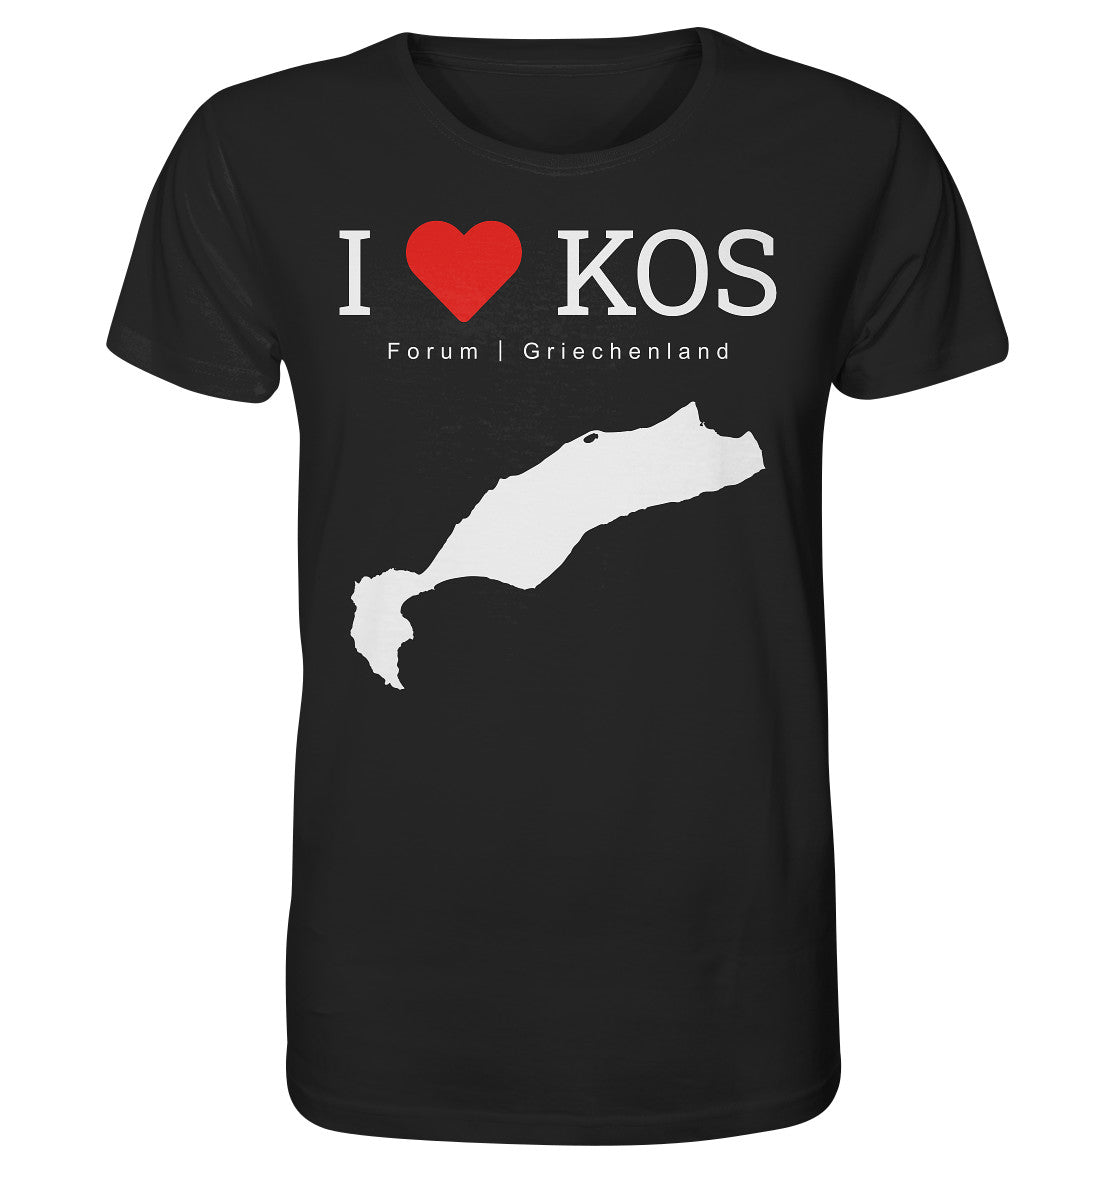 I LOVE KOS - Forum Griechenland White - Organic Shirt